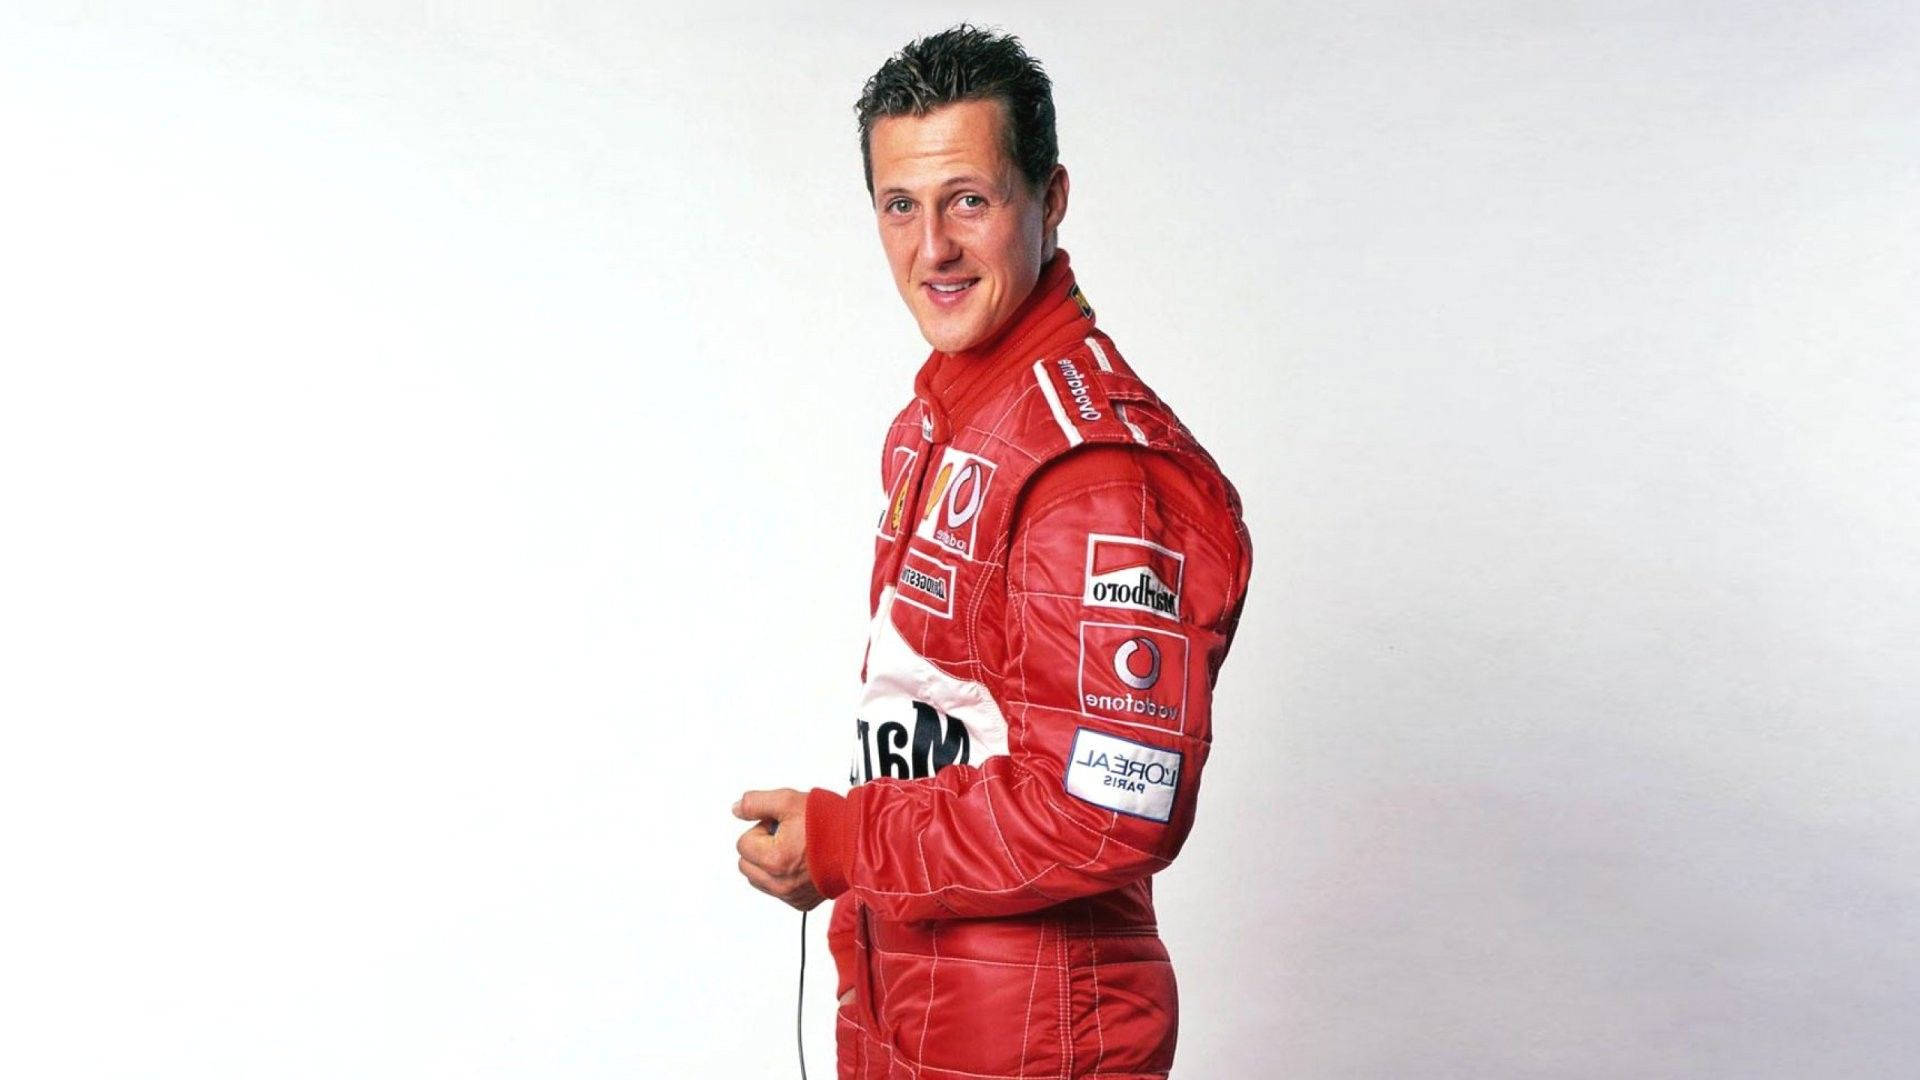 Solo Shot Michael Schumacher Background